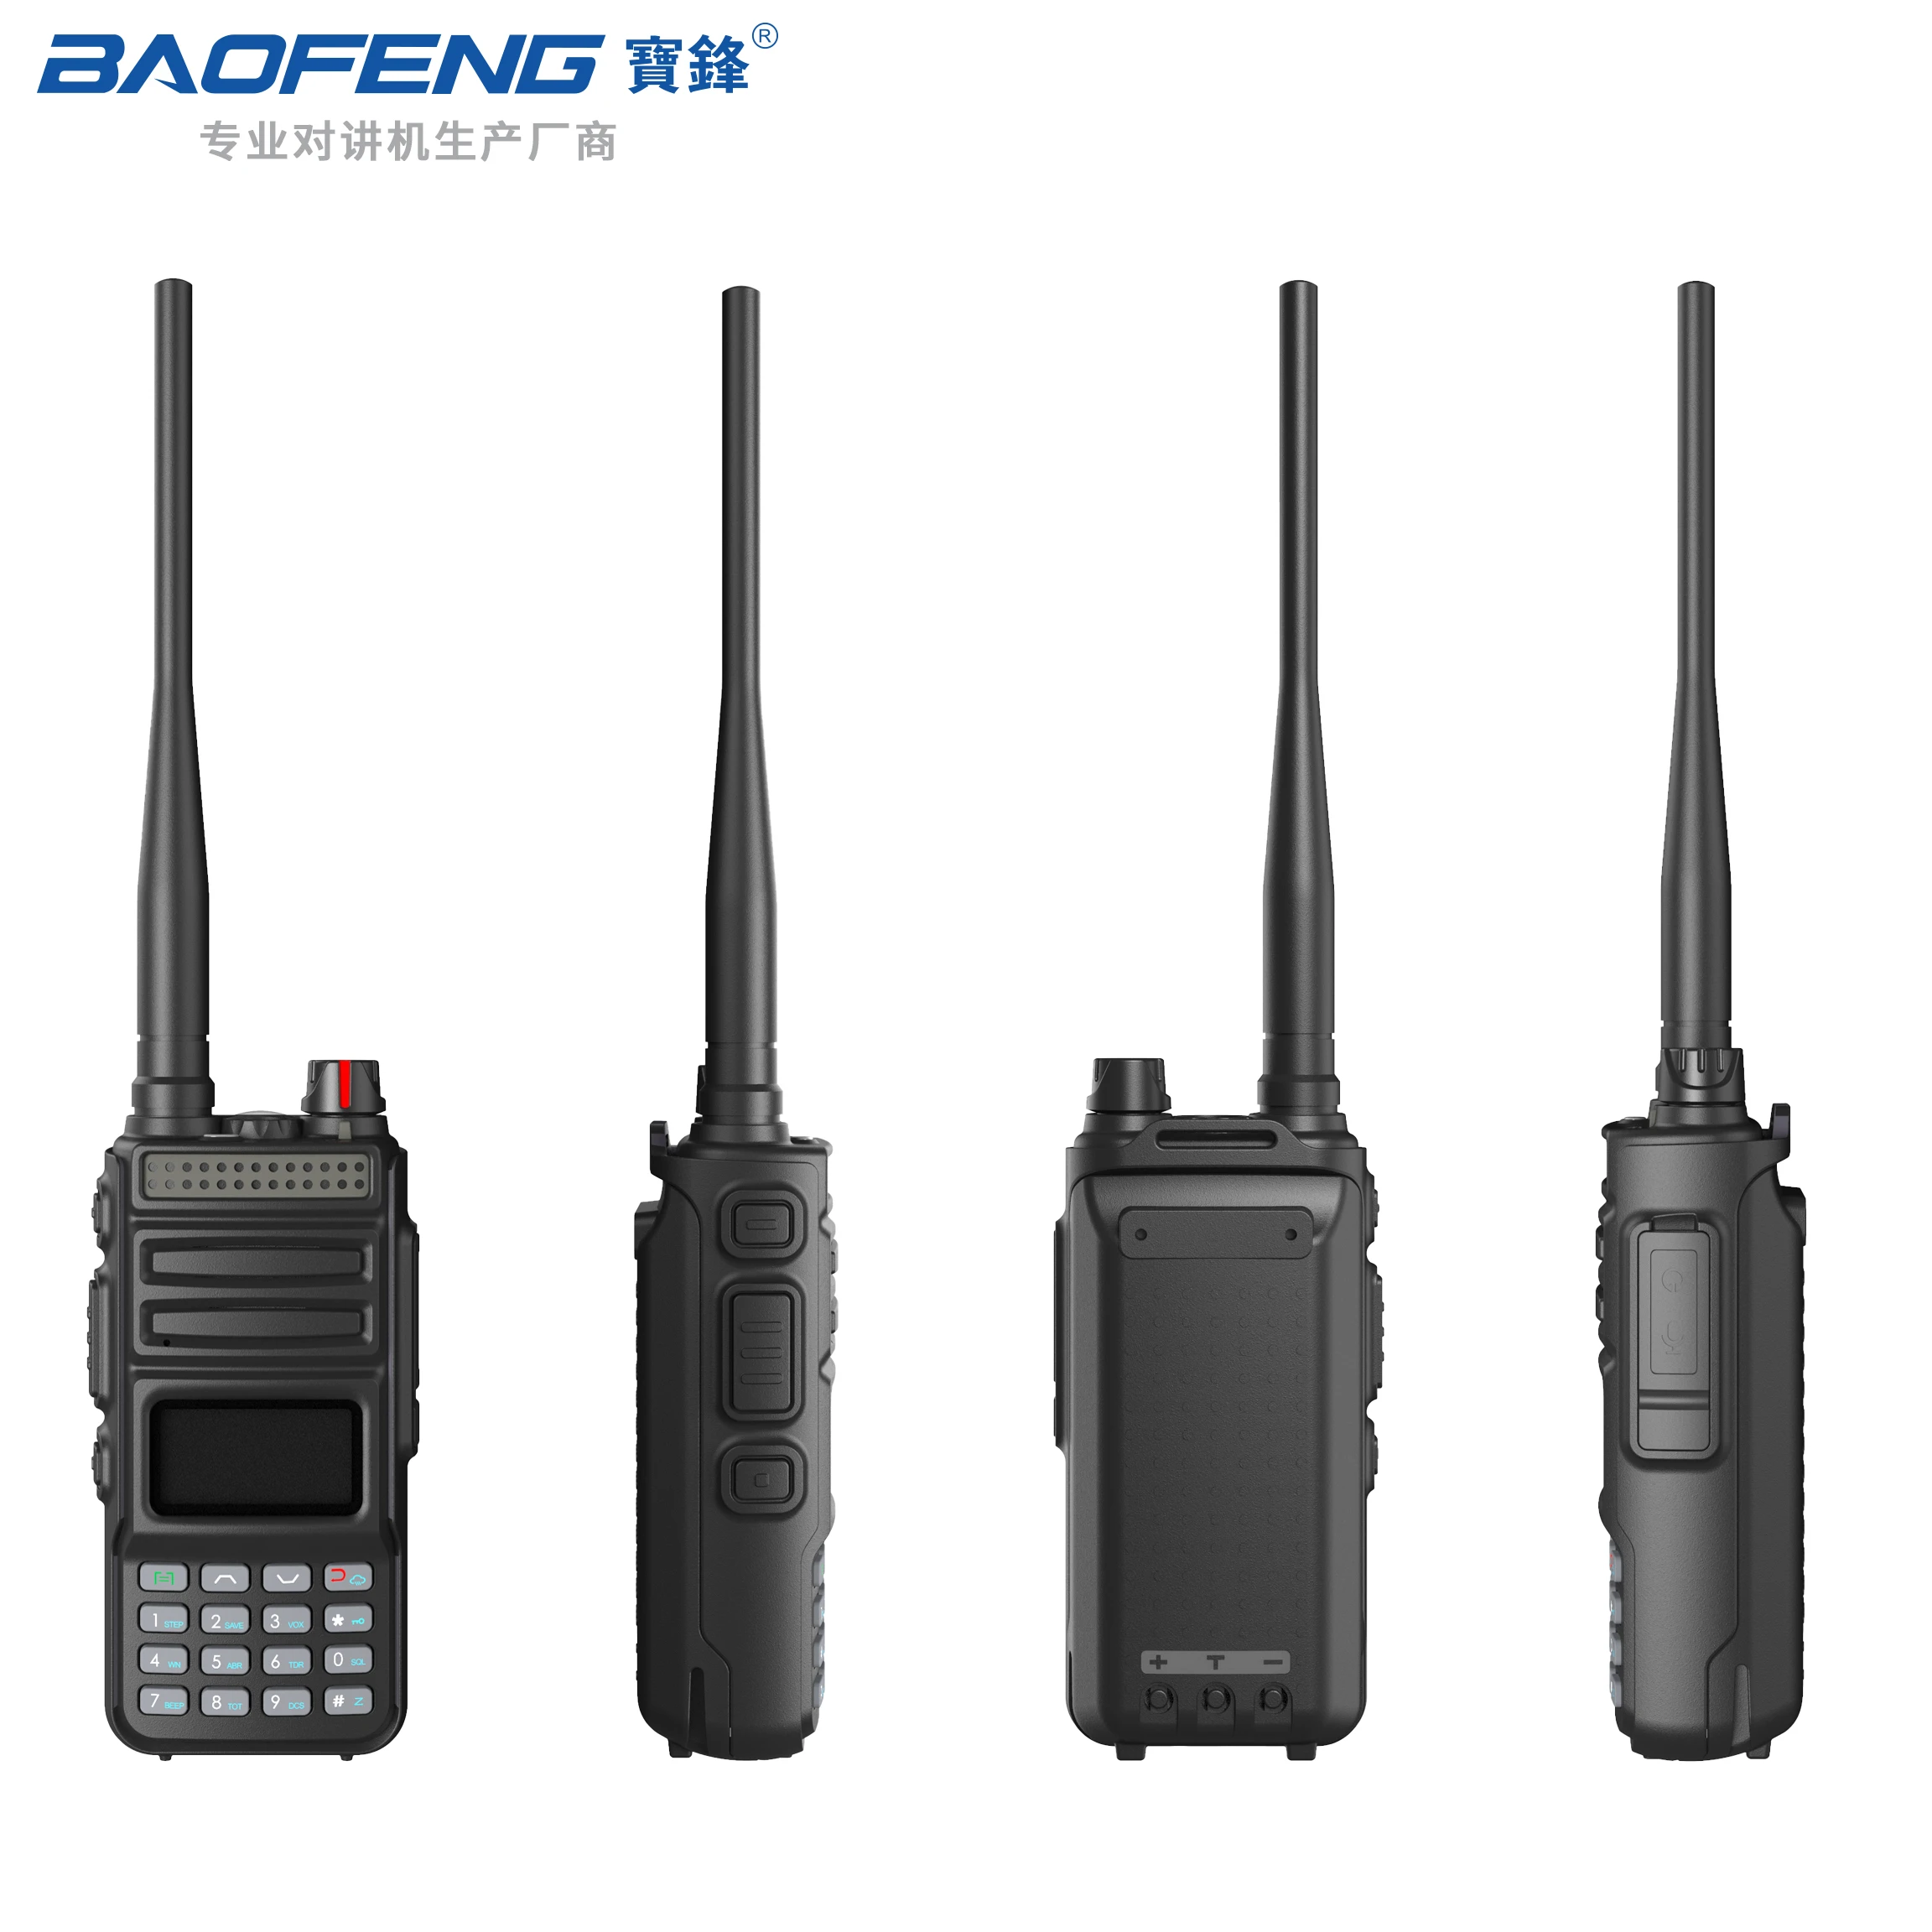 Baofeng BF UV-13 Walkie Talkie Portable Two Way Radio Handheld uhf vhf Dual Band walkie-talkies uv13 for amateur